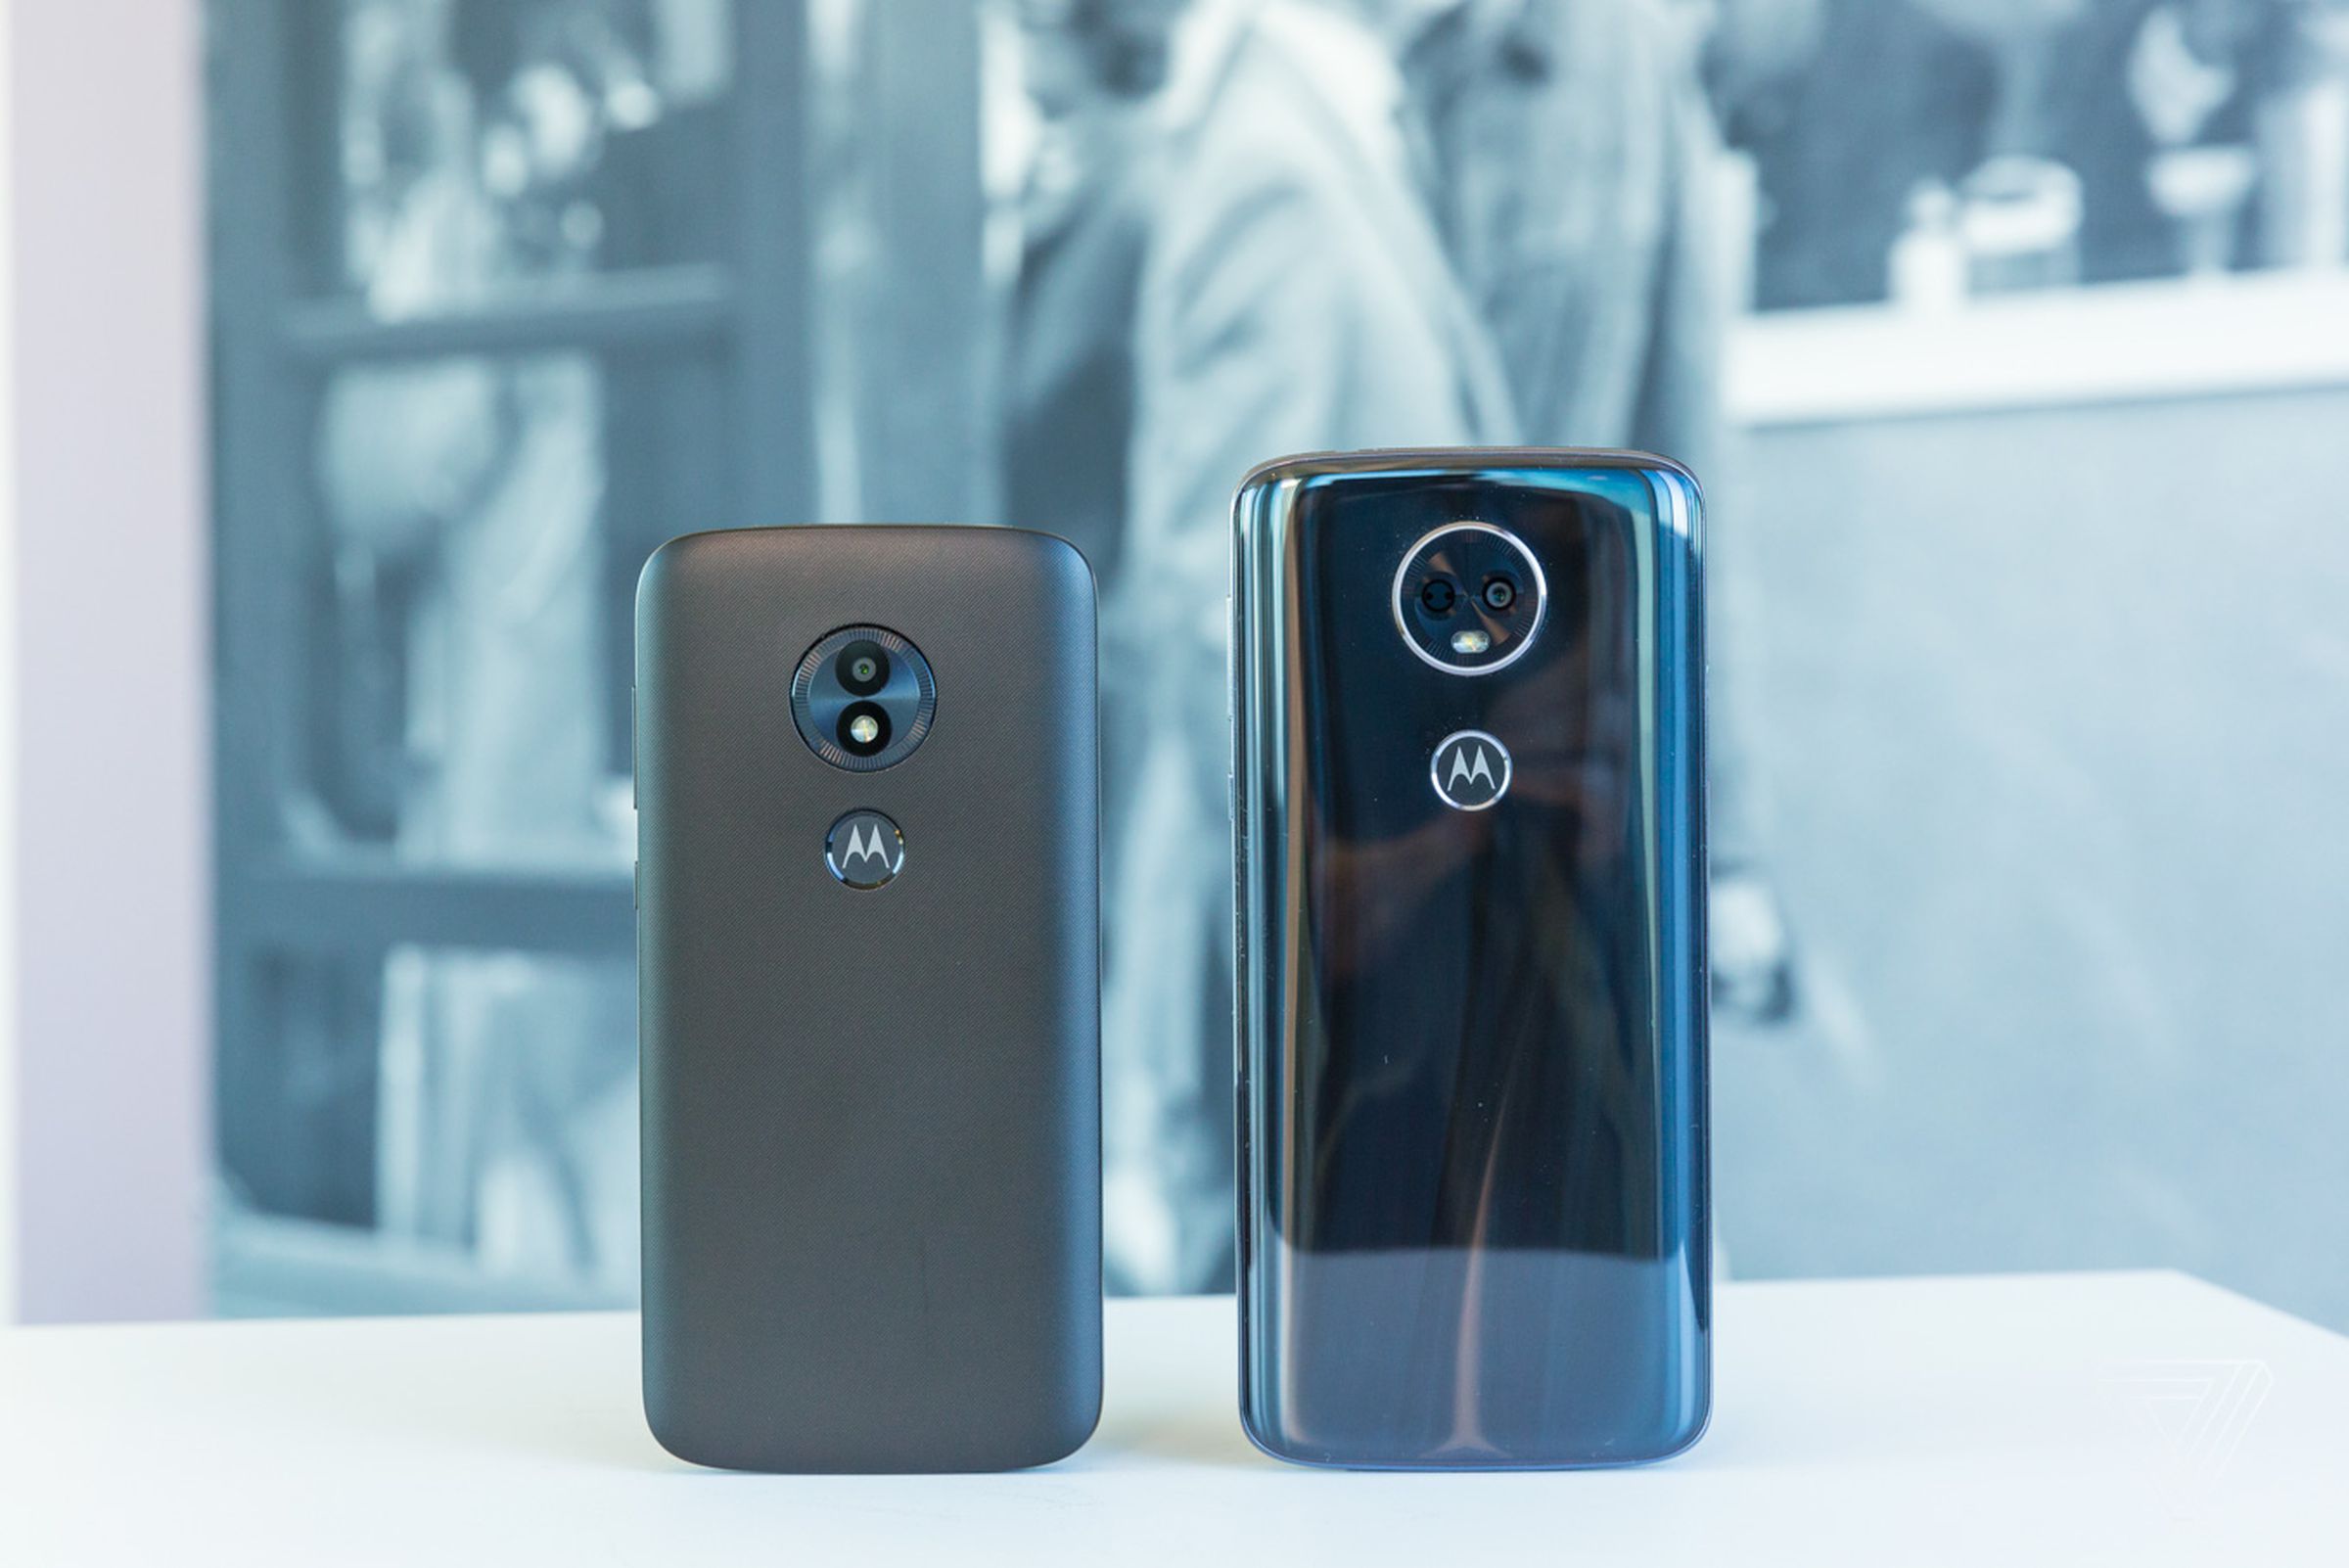 Moto E5 Play (left) and Moto E5 Plus (right)